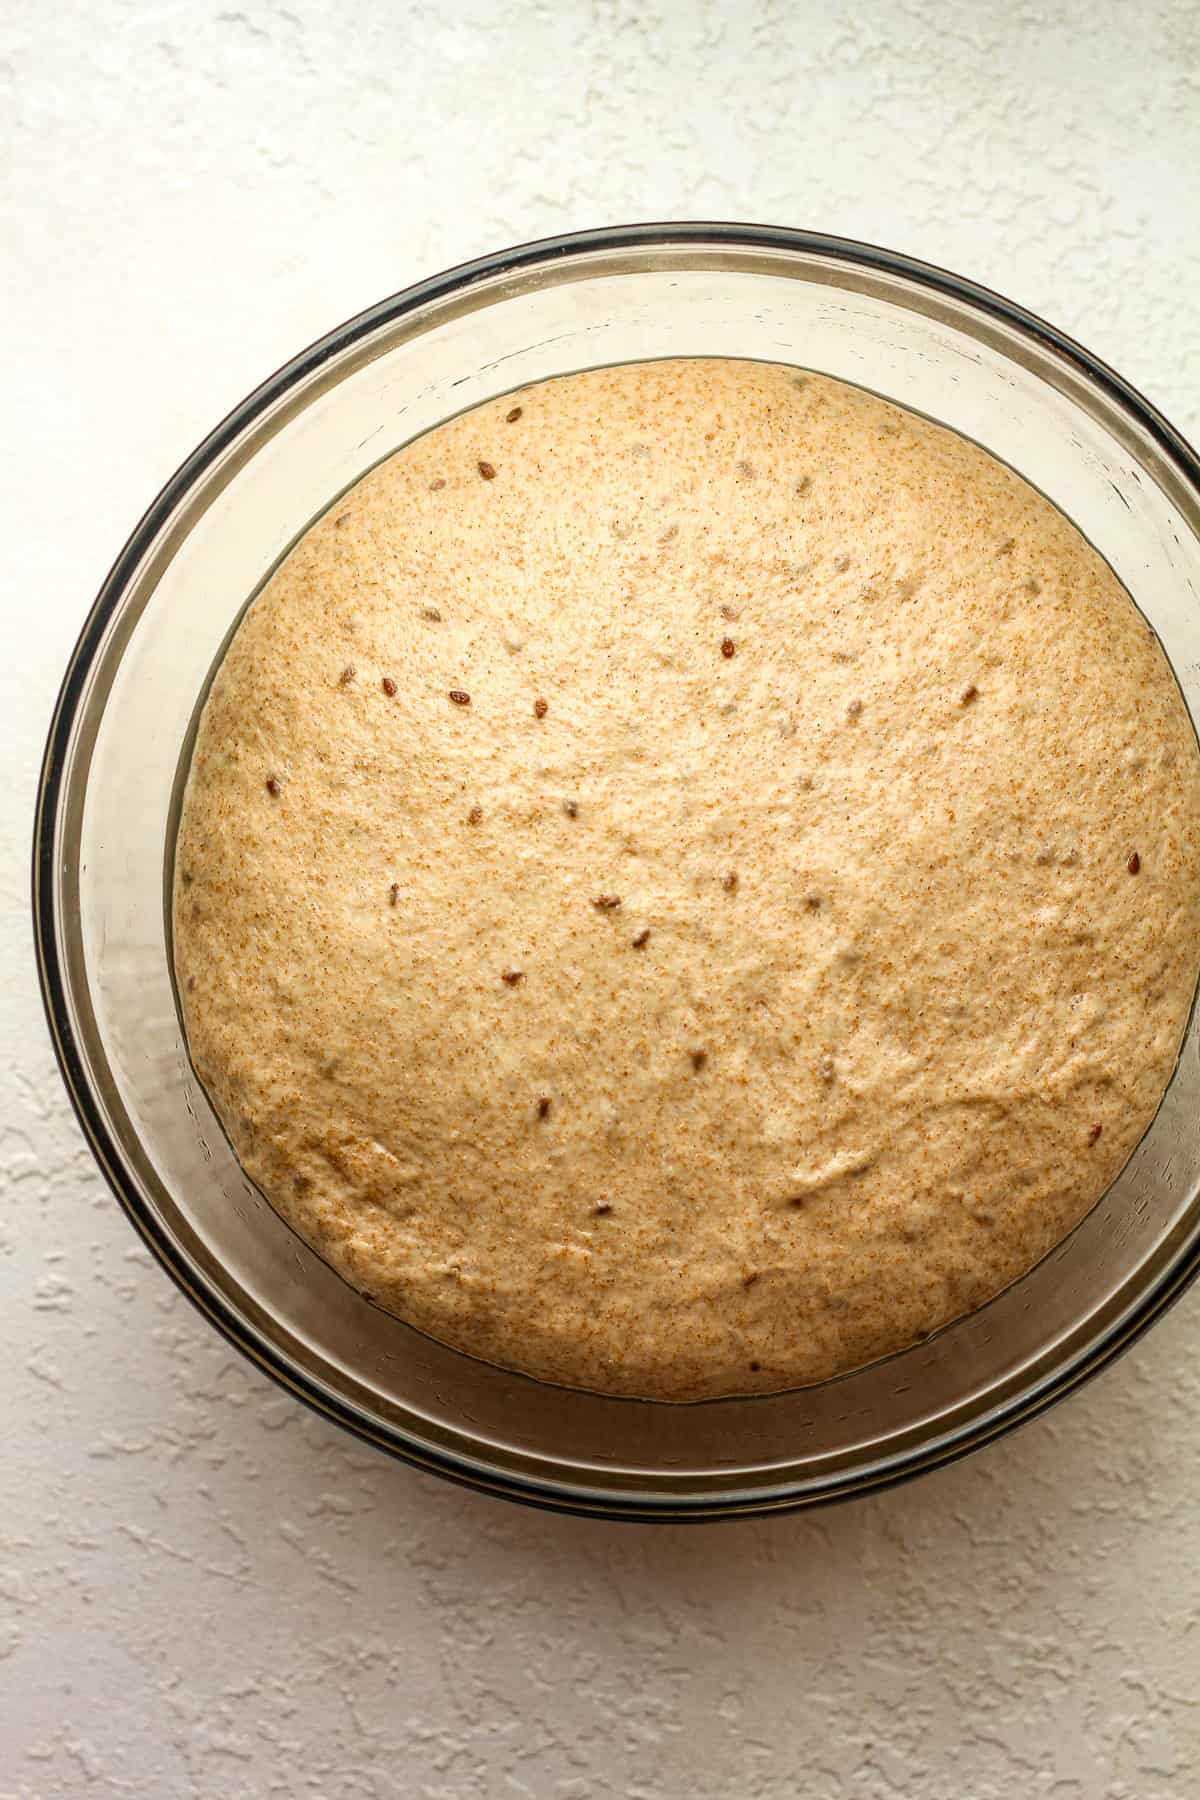 A bowl of raised wheat bread dough.